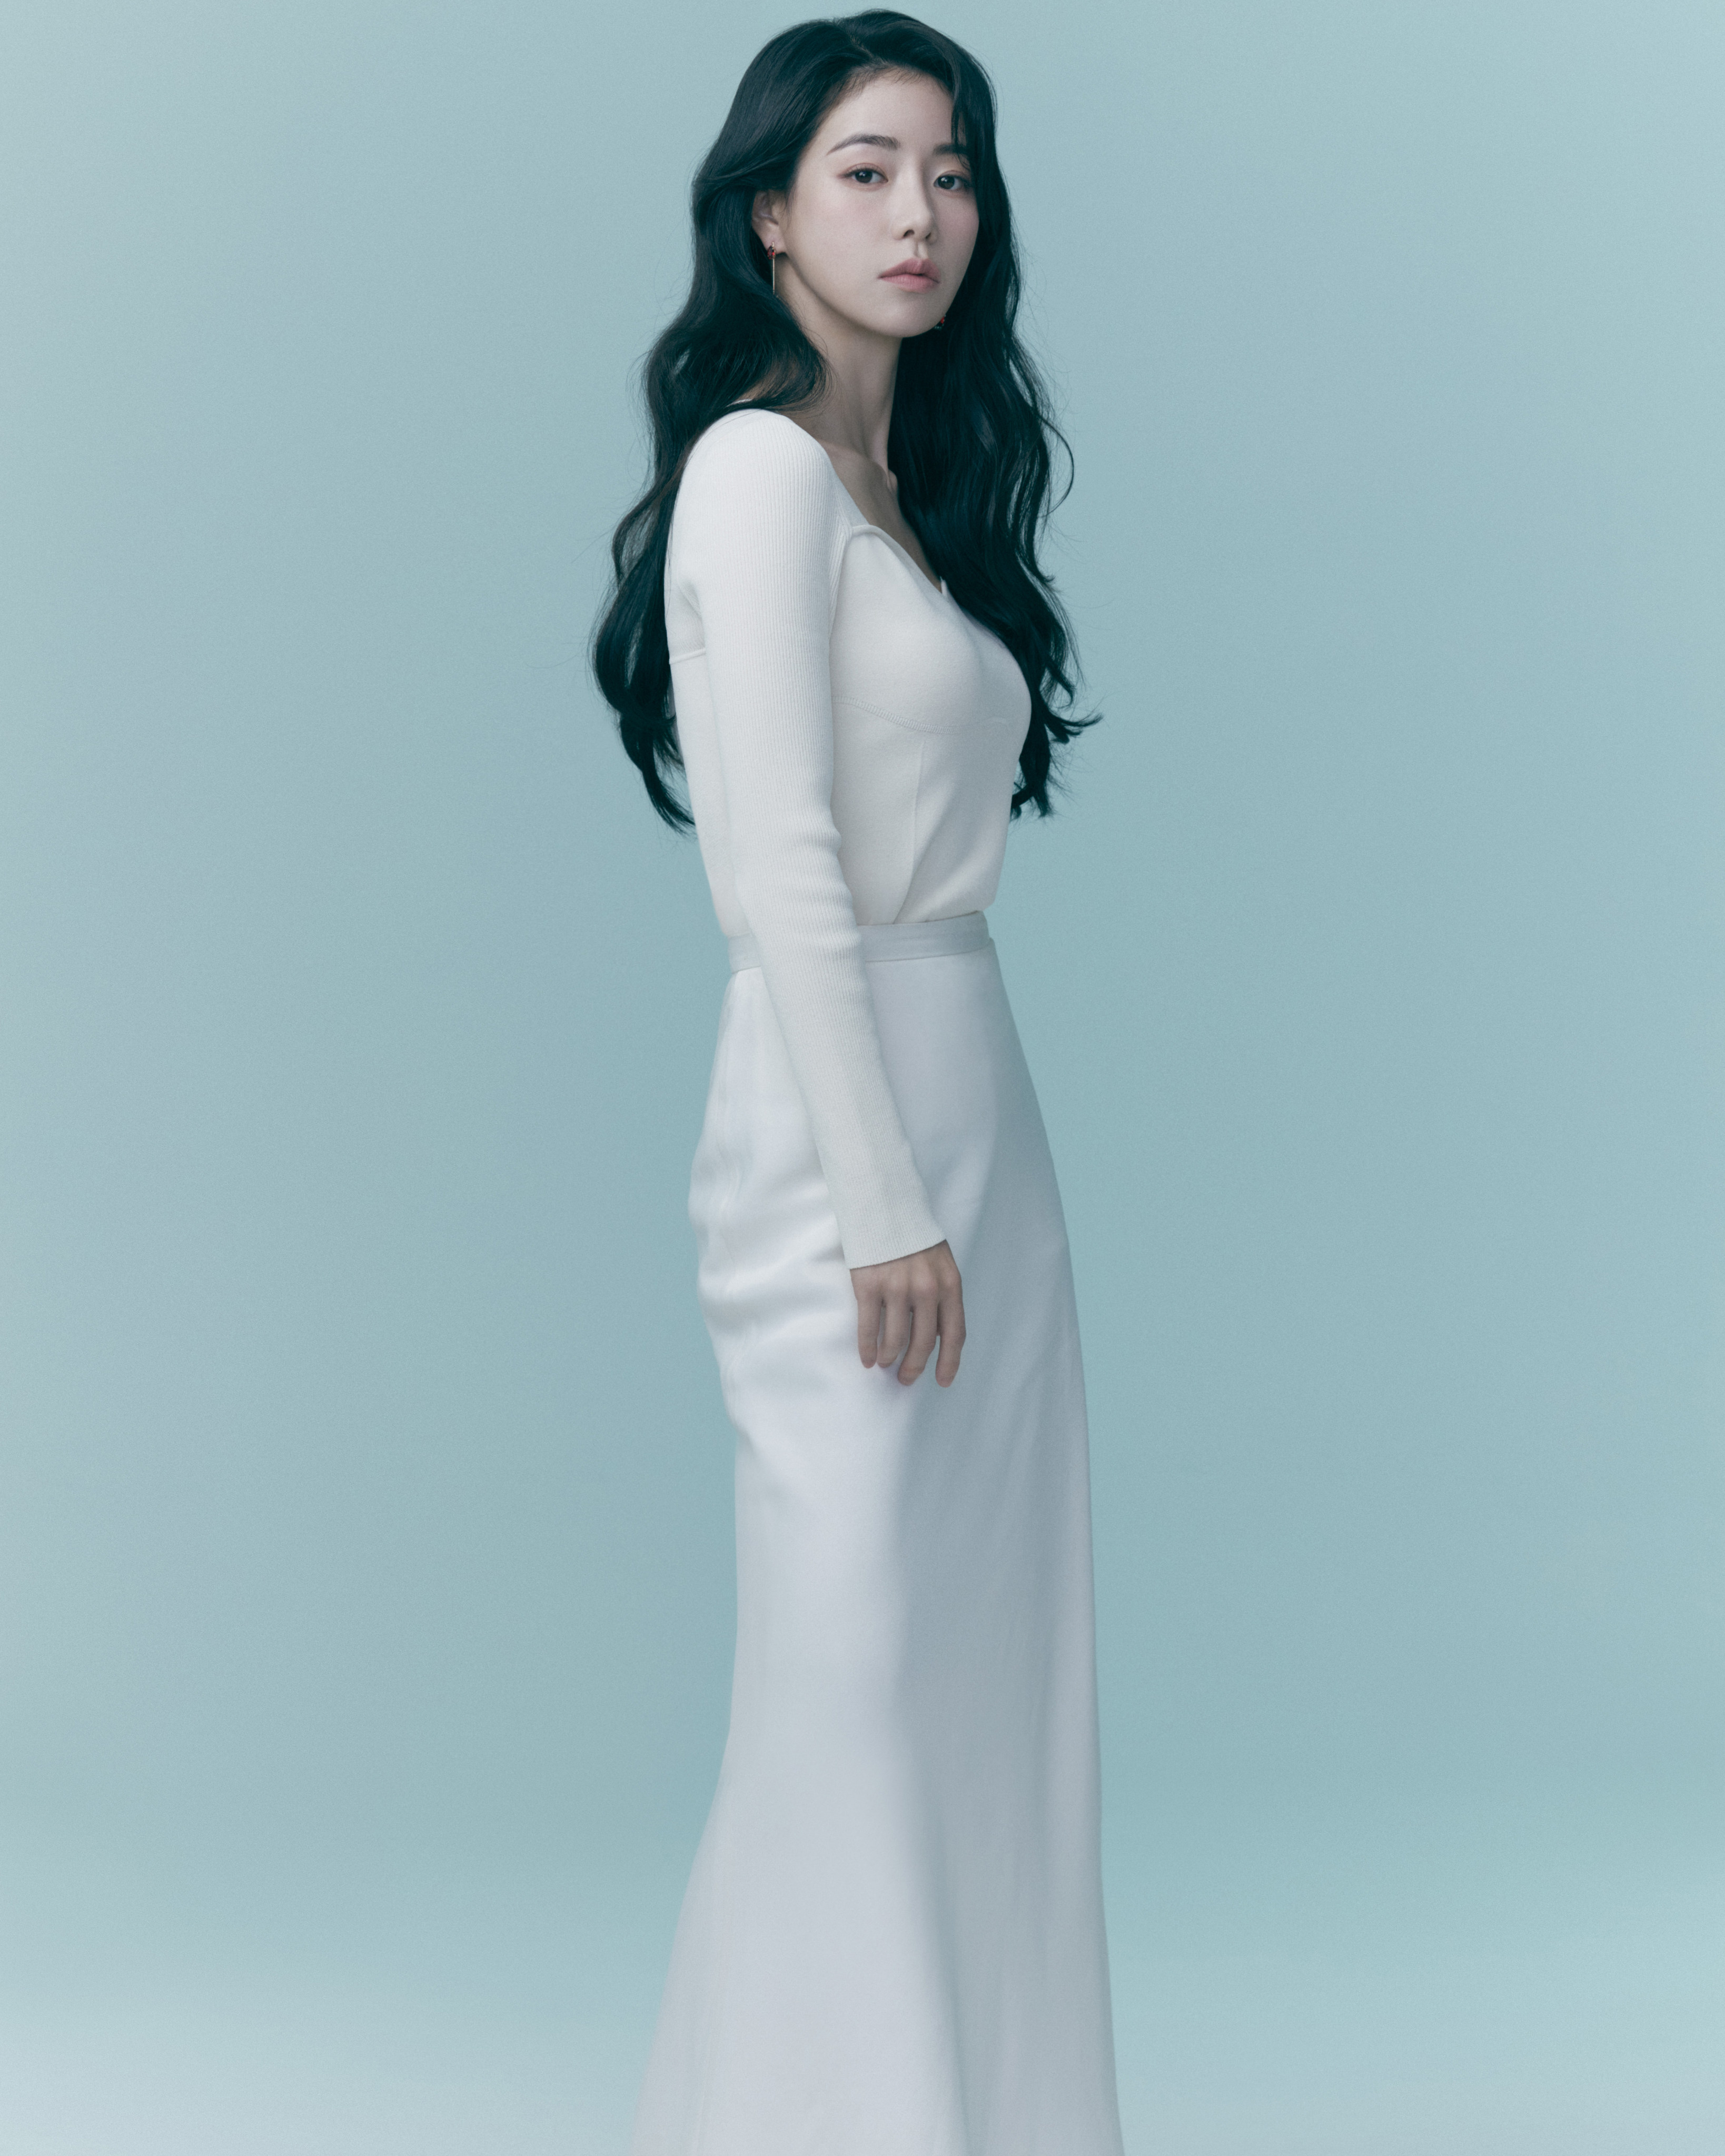 Lim Ji-yeon, star of “The Glory”. Photo: Netflix.